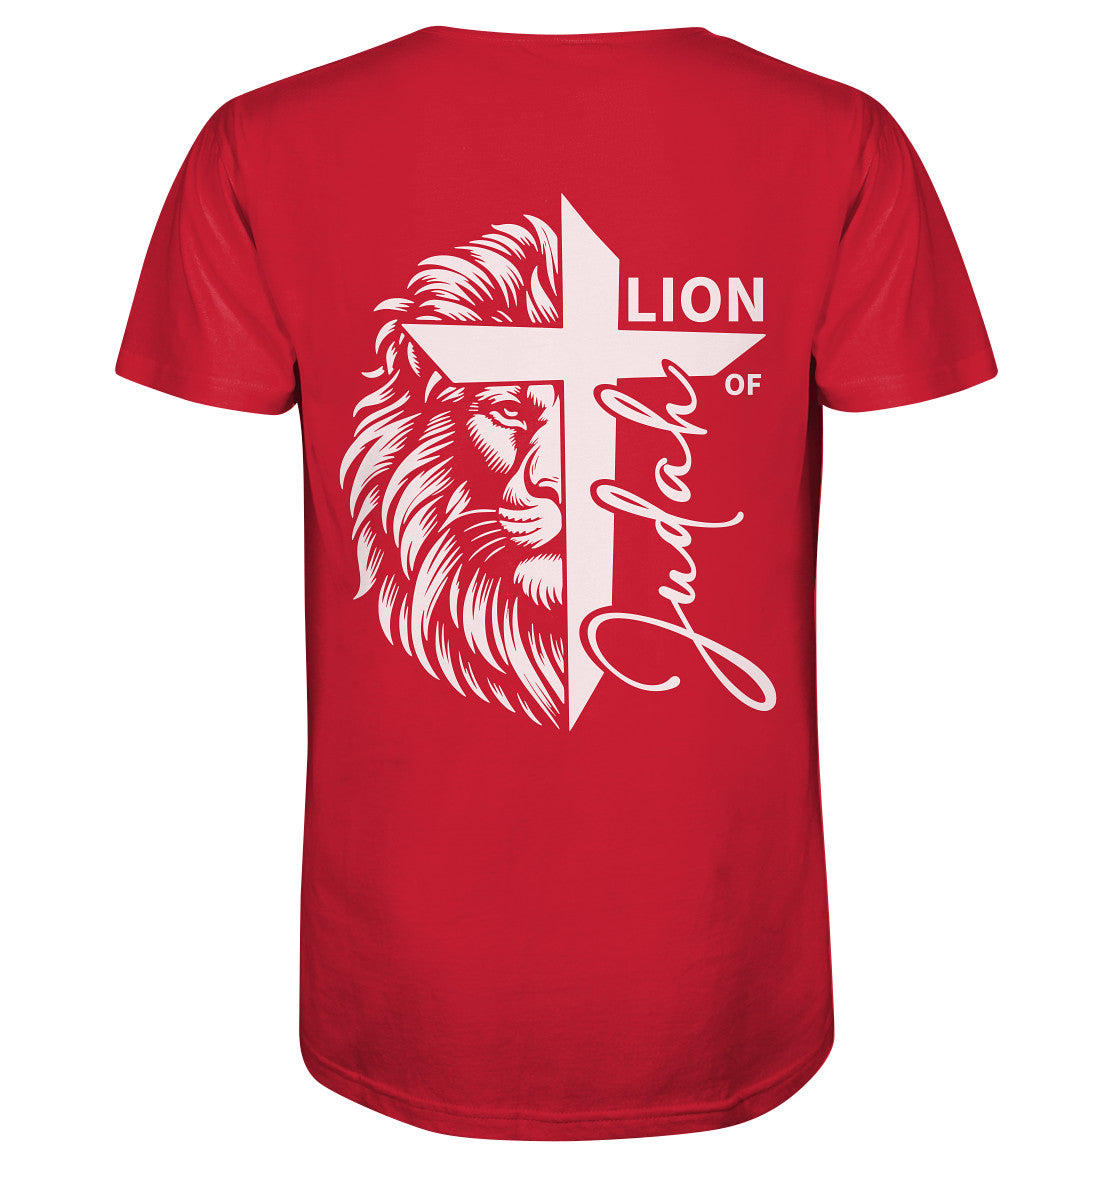 Offb 5,5 - Lion of Judah - Cross - Organic Shirt